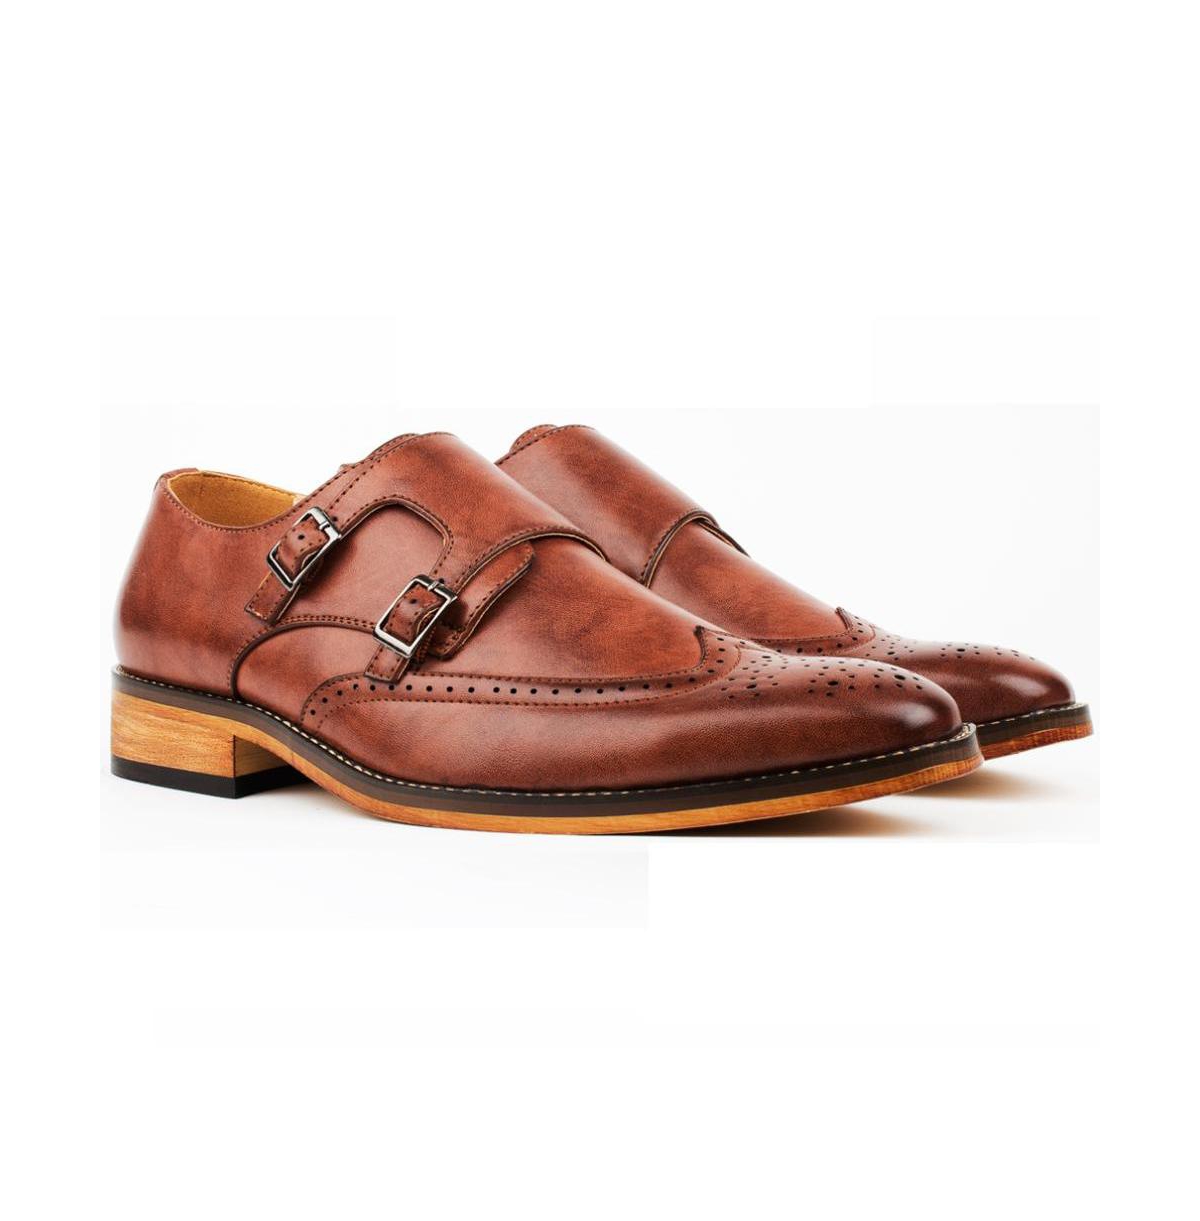 Men's Monk Strap Brogue Dress Shoes - Brown